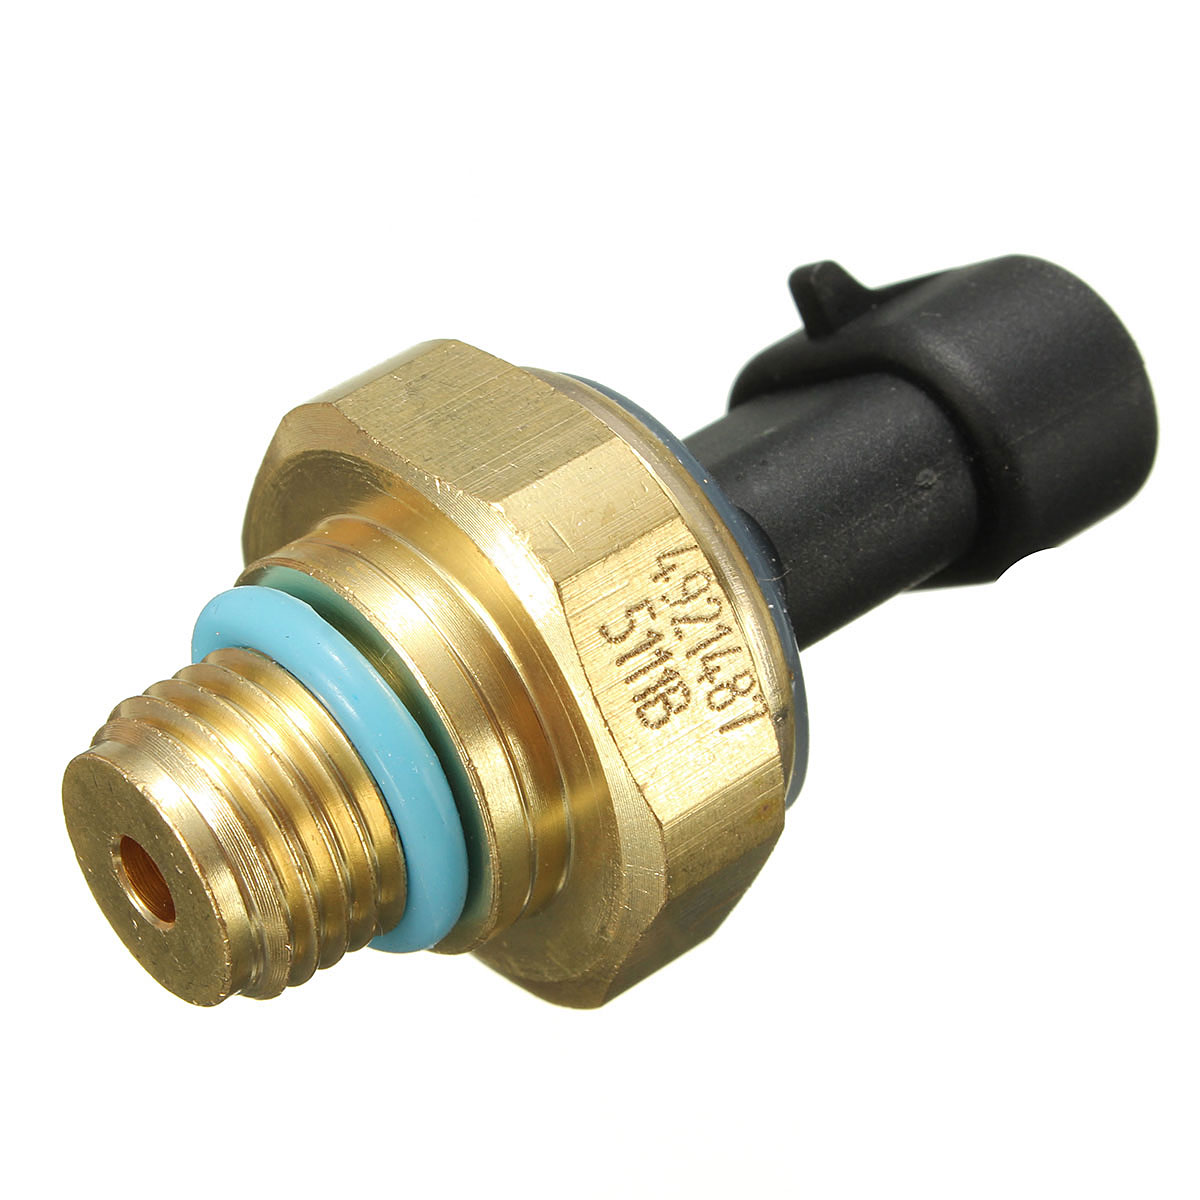 Oil-Pressure-Sensor-Transducer-Transmitter-for-Cummins-N14-M11-ISX-4921487-1012561